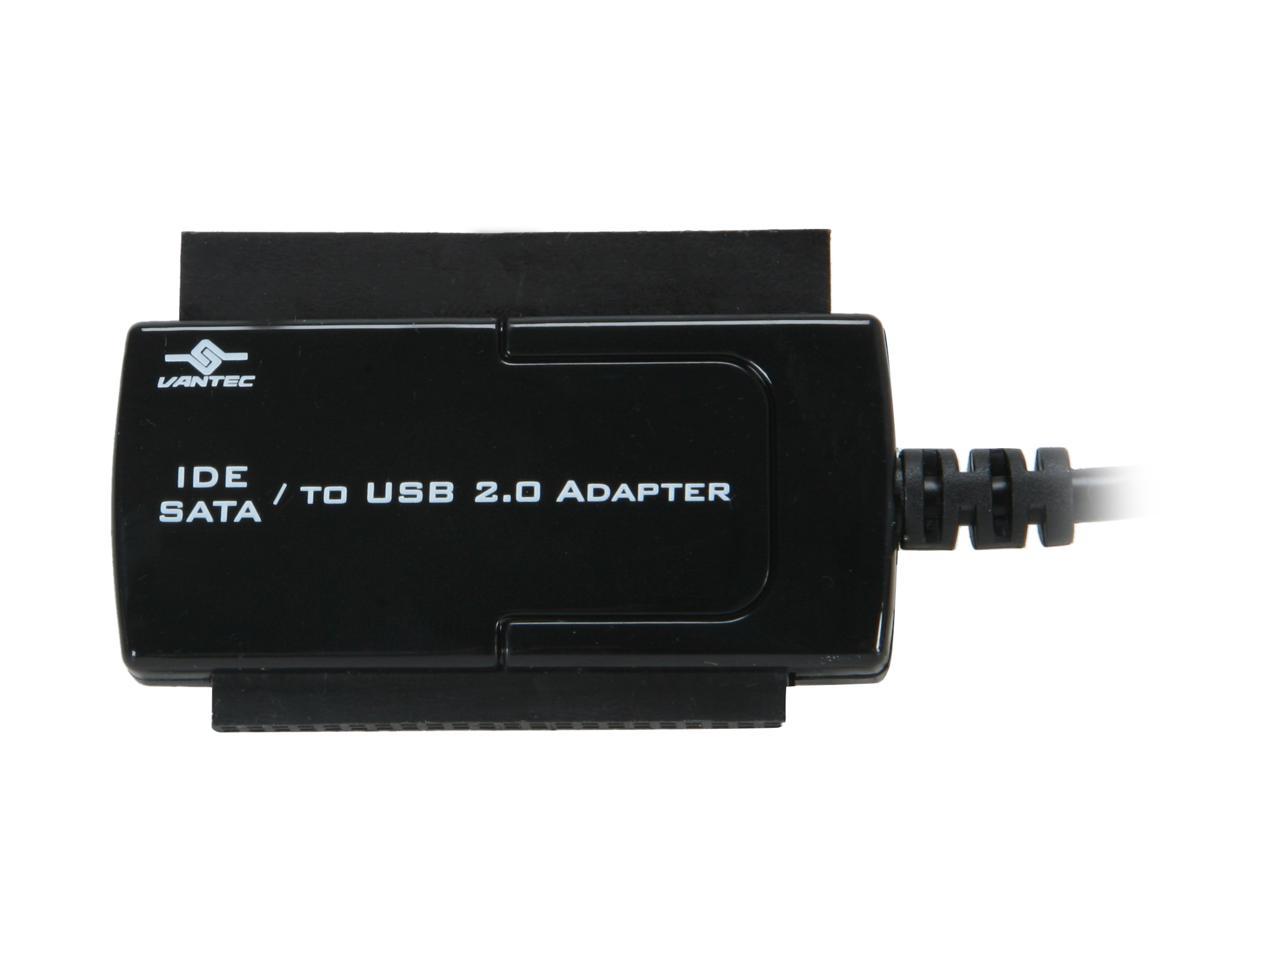 Vantec to USB 2.0 Adapter - Newegg.com